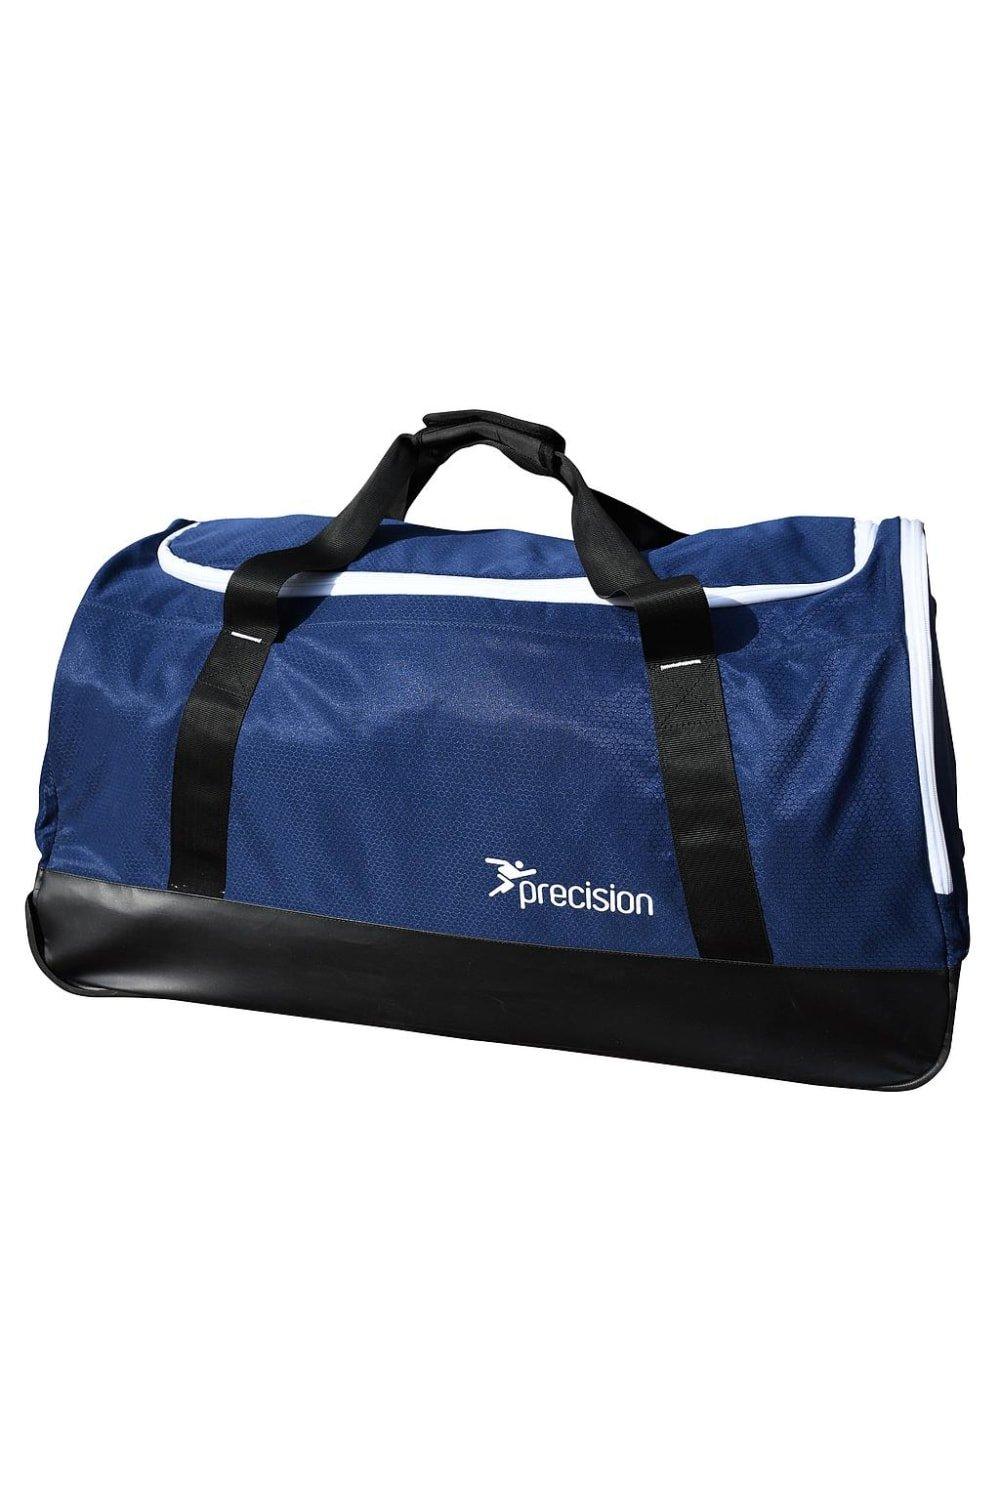 Pro Hx Team Trolley Bag